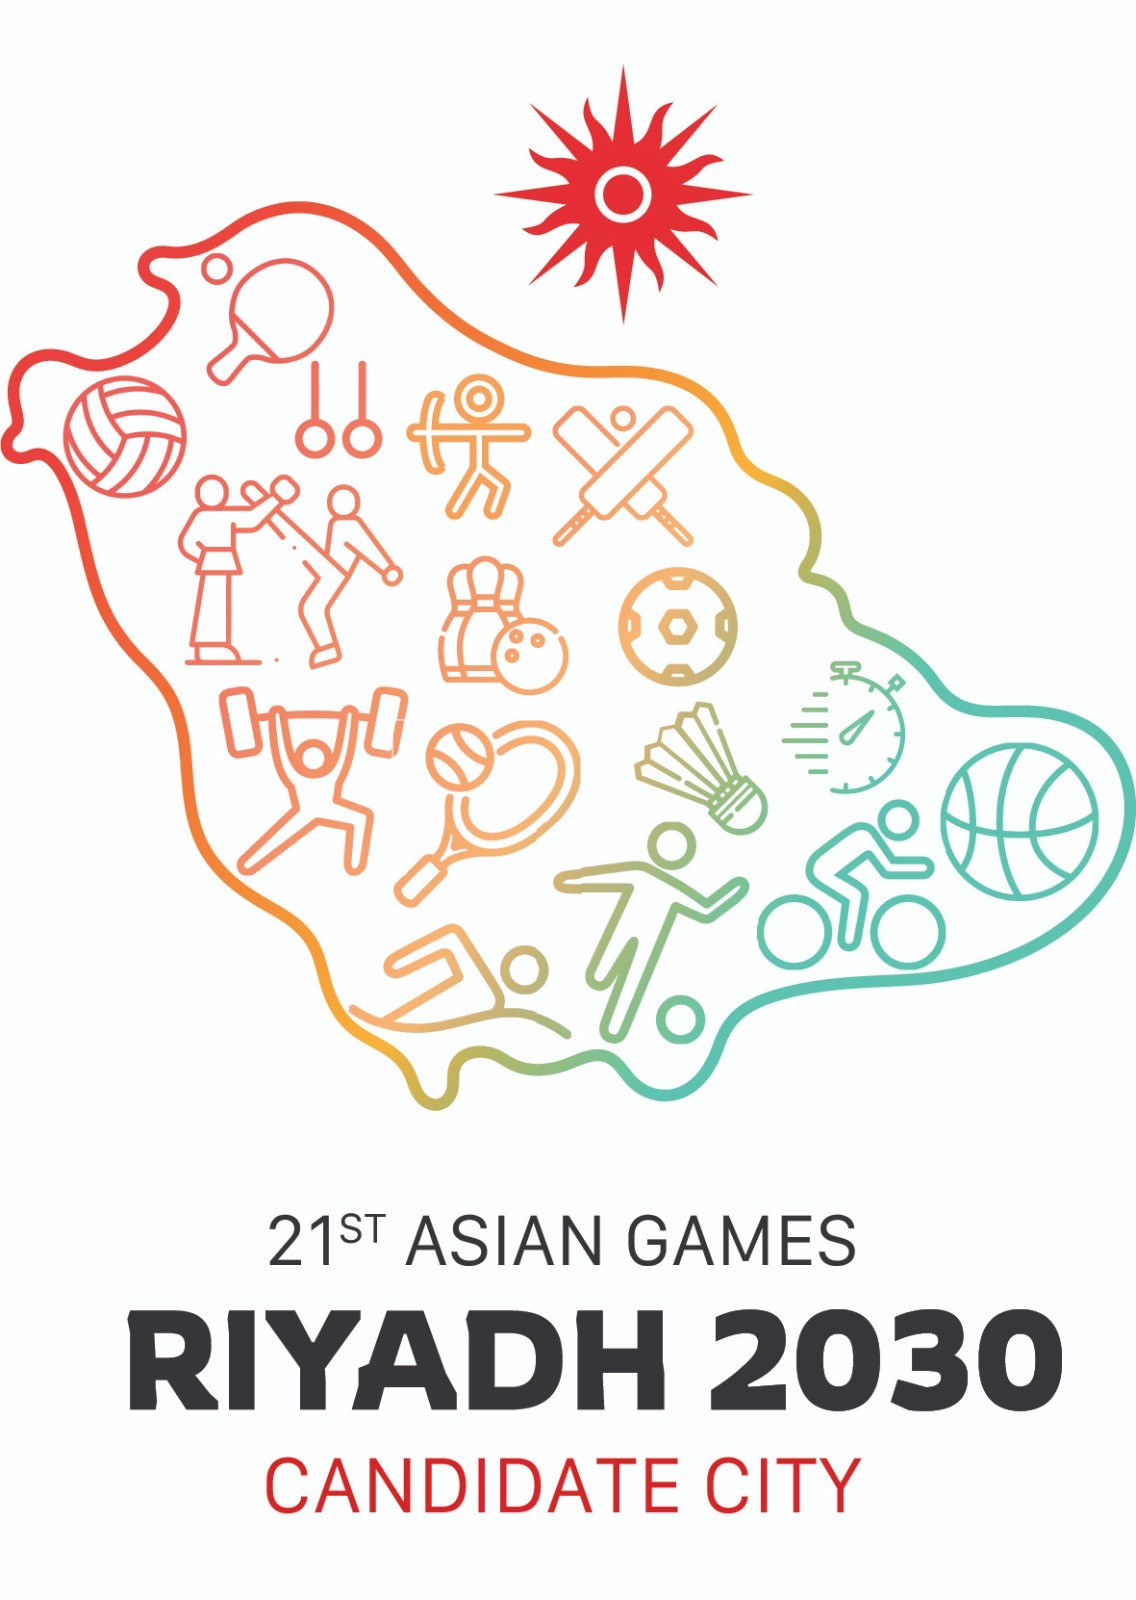 Riyadh has launched the slogan and logo for its 2030 Asian Games bid ©Riyadh 2030